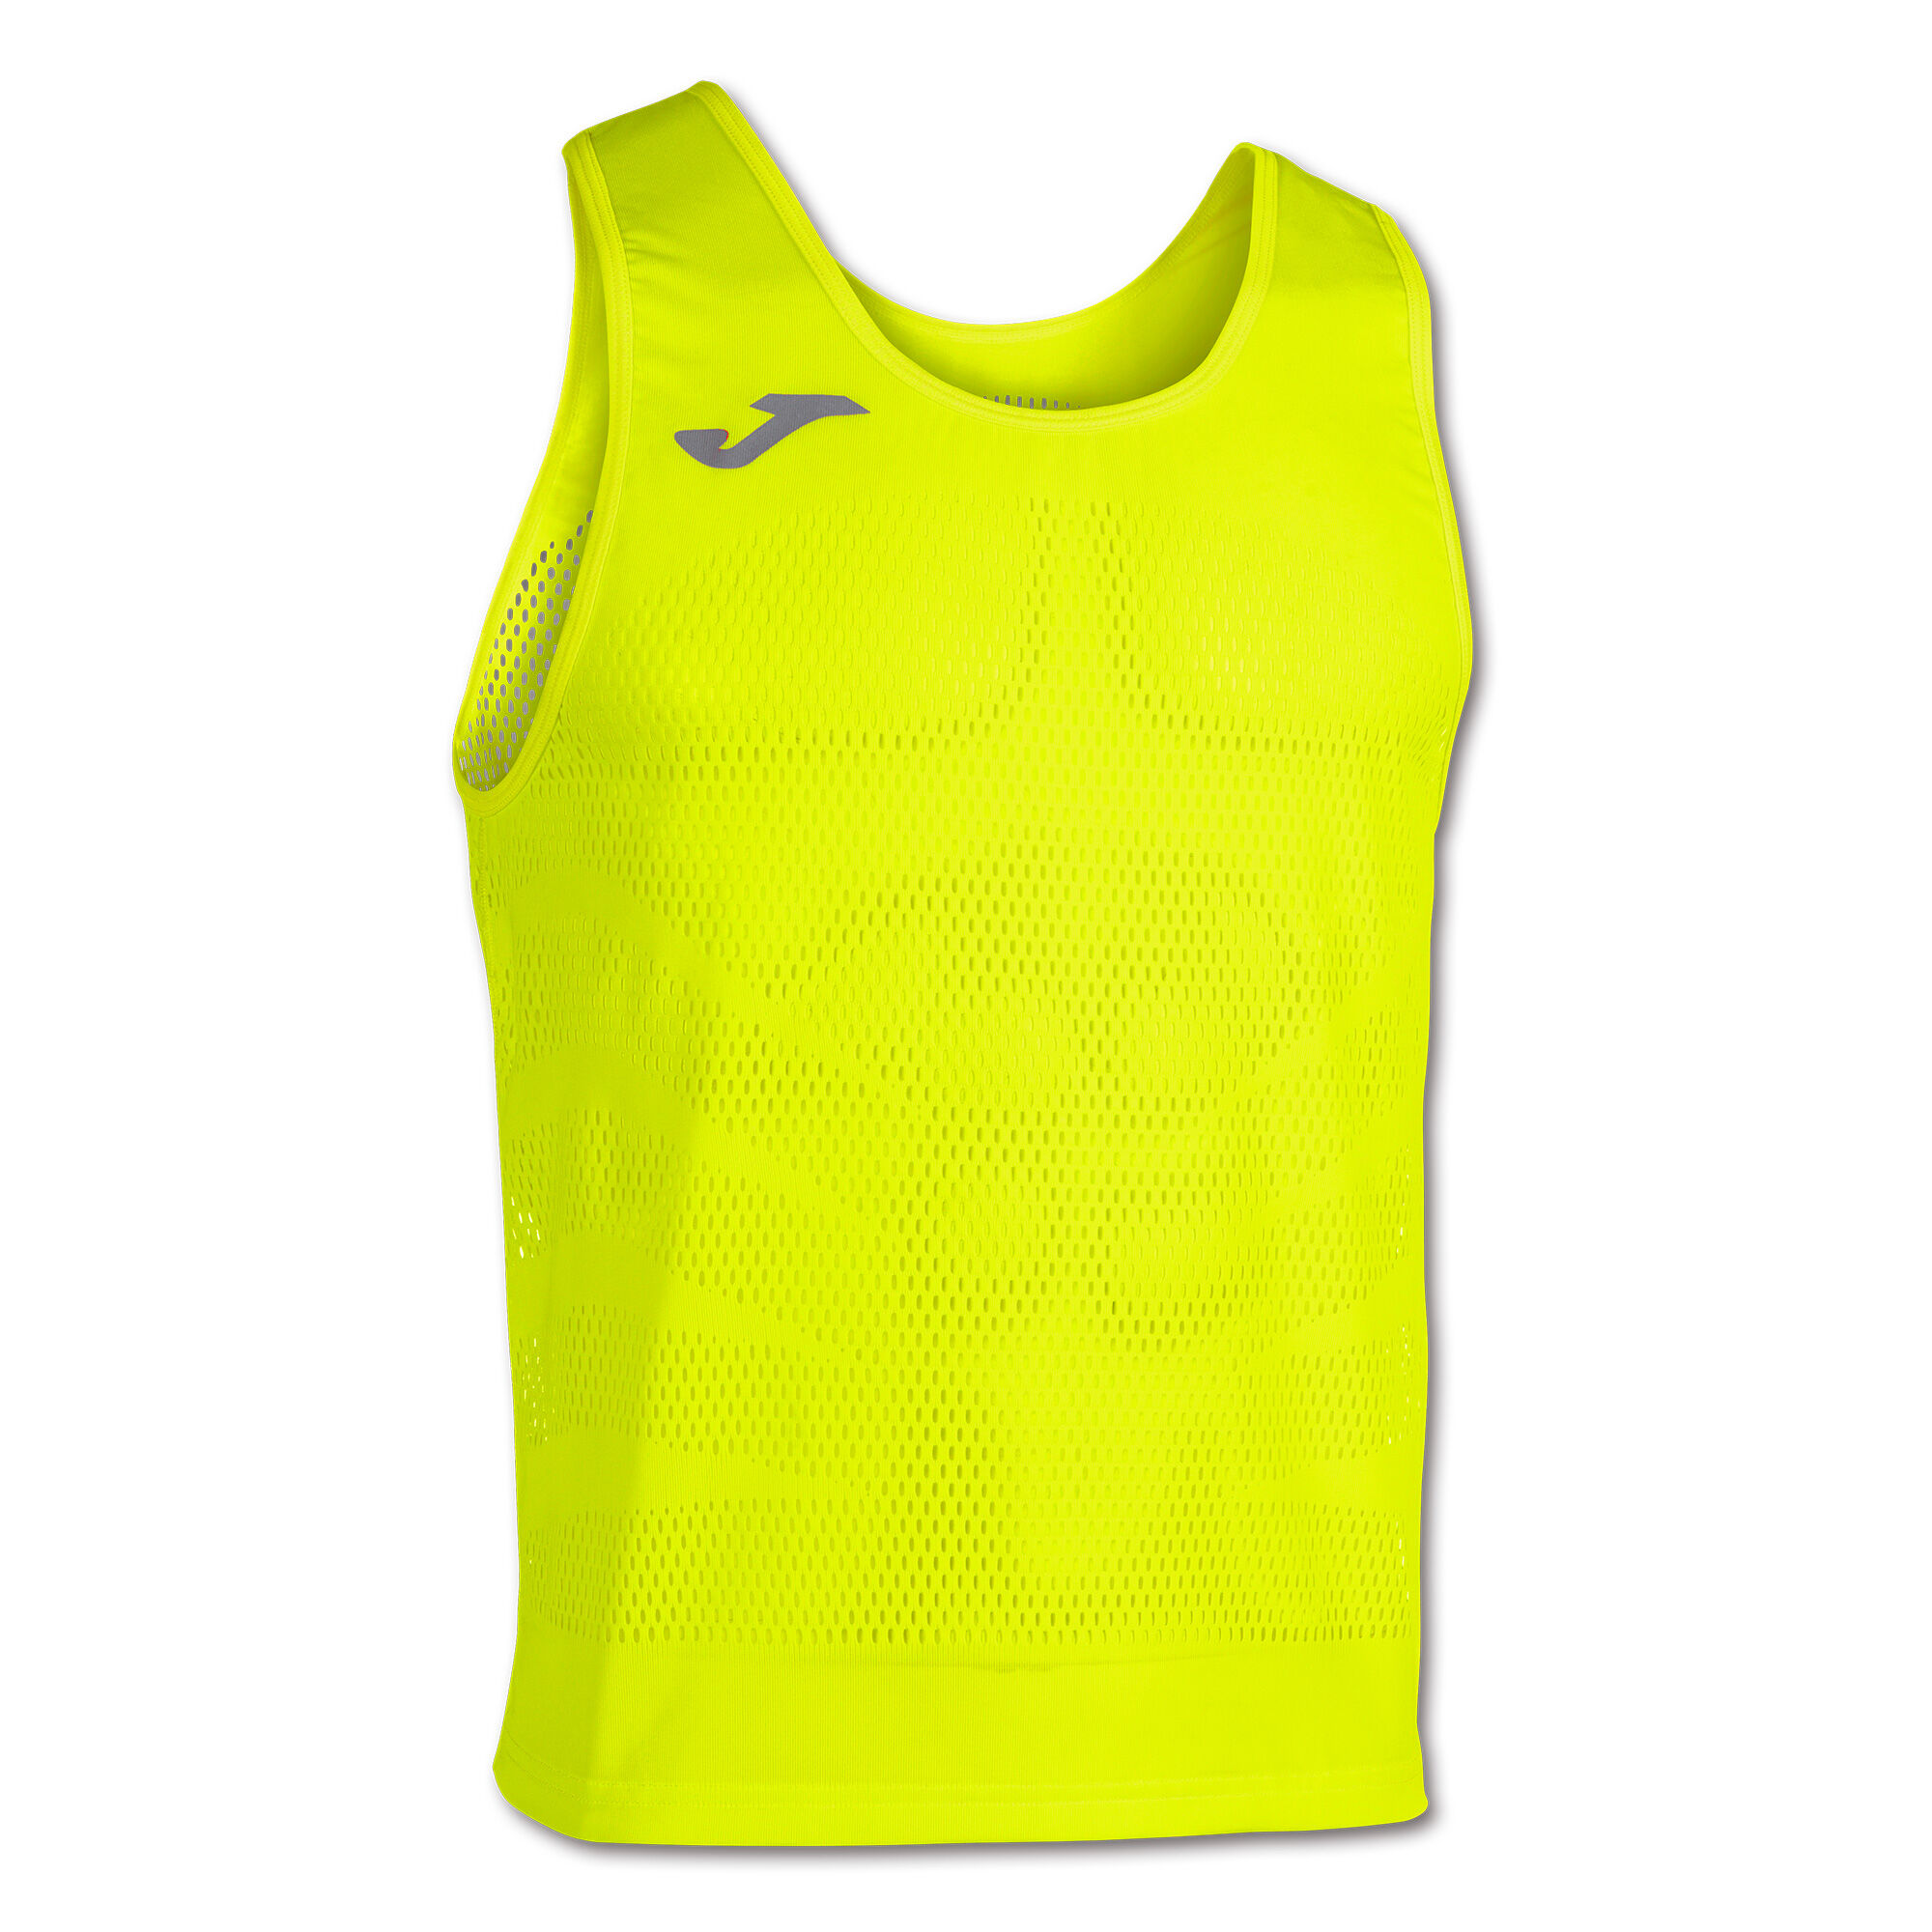 Camiseta tirantes hombre Marathon amarillo flúor